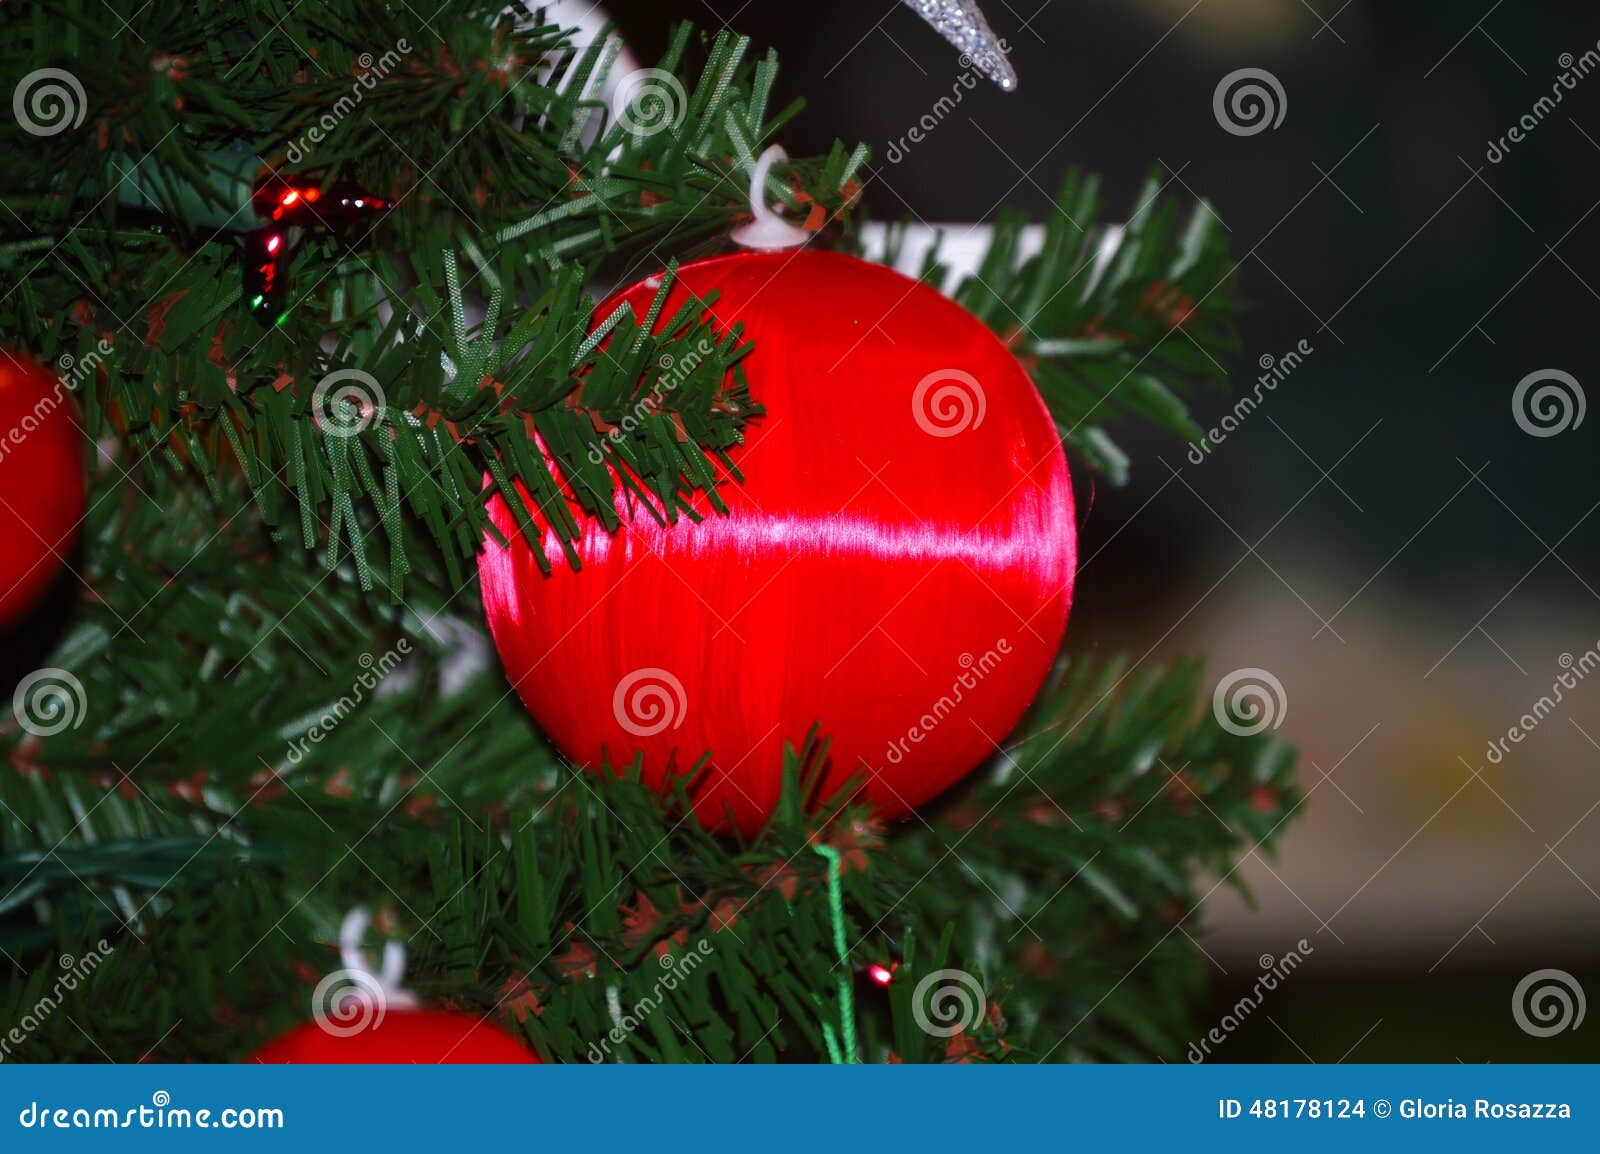 christmas balls tree decoration